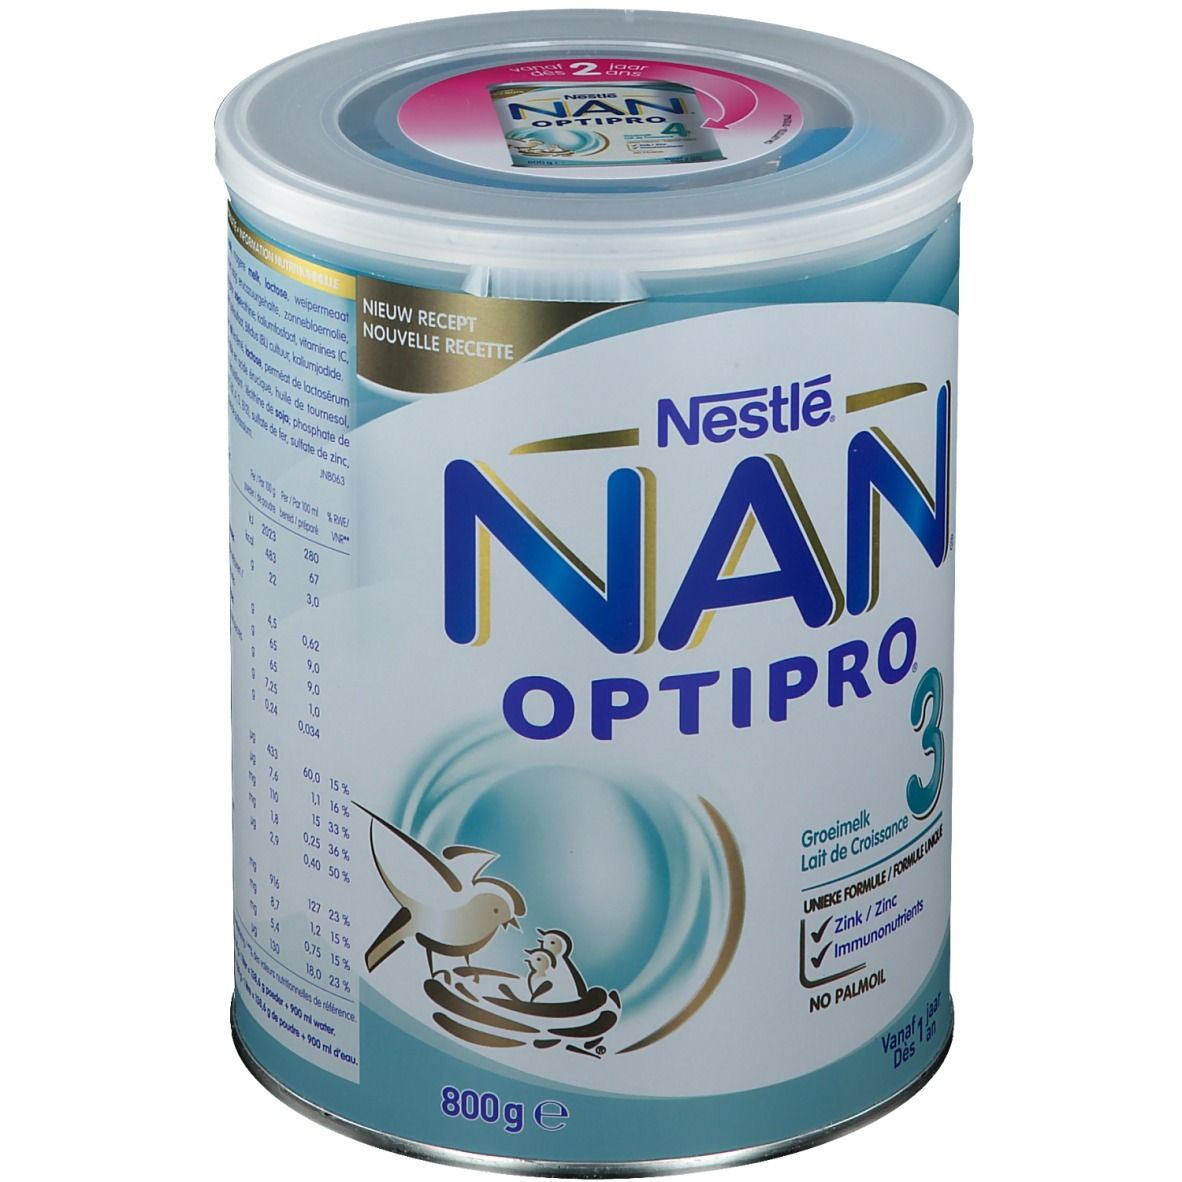 Nestlé® NAN® OptiPro® 3